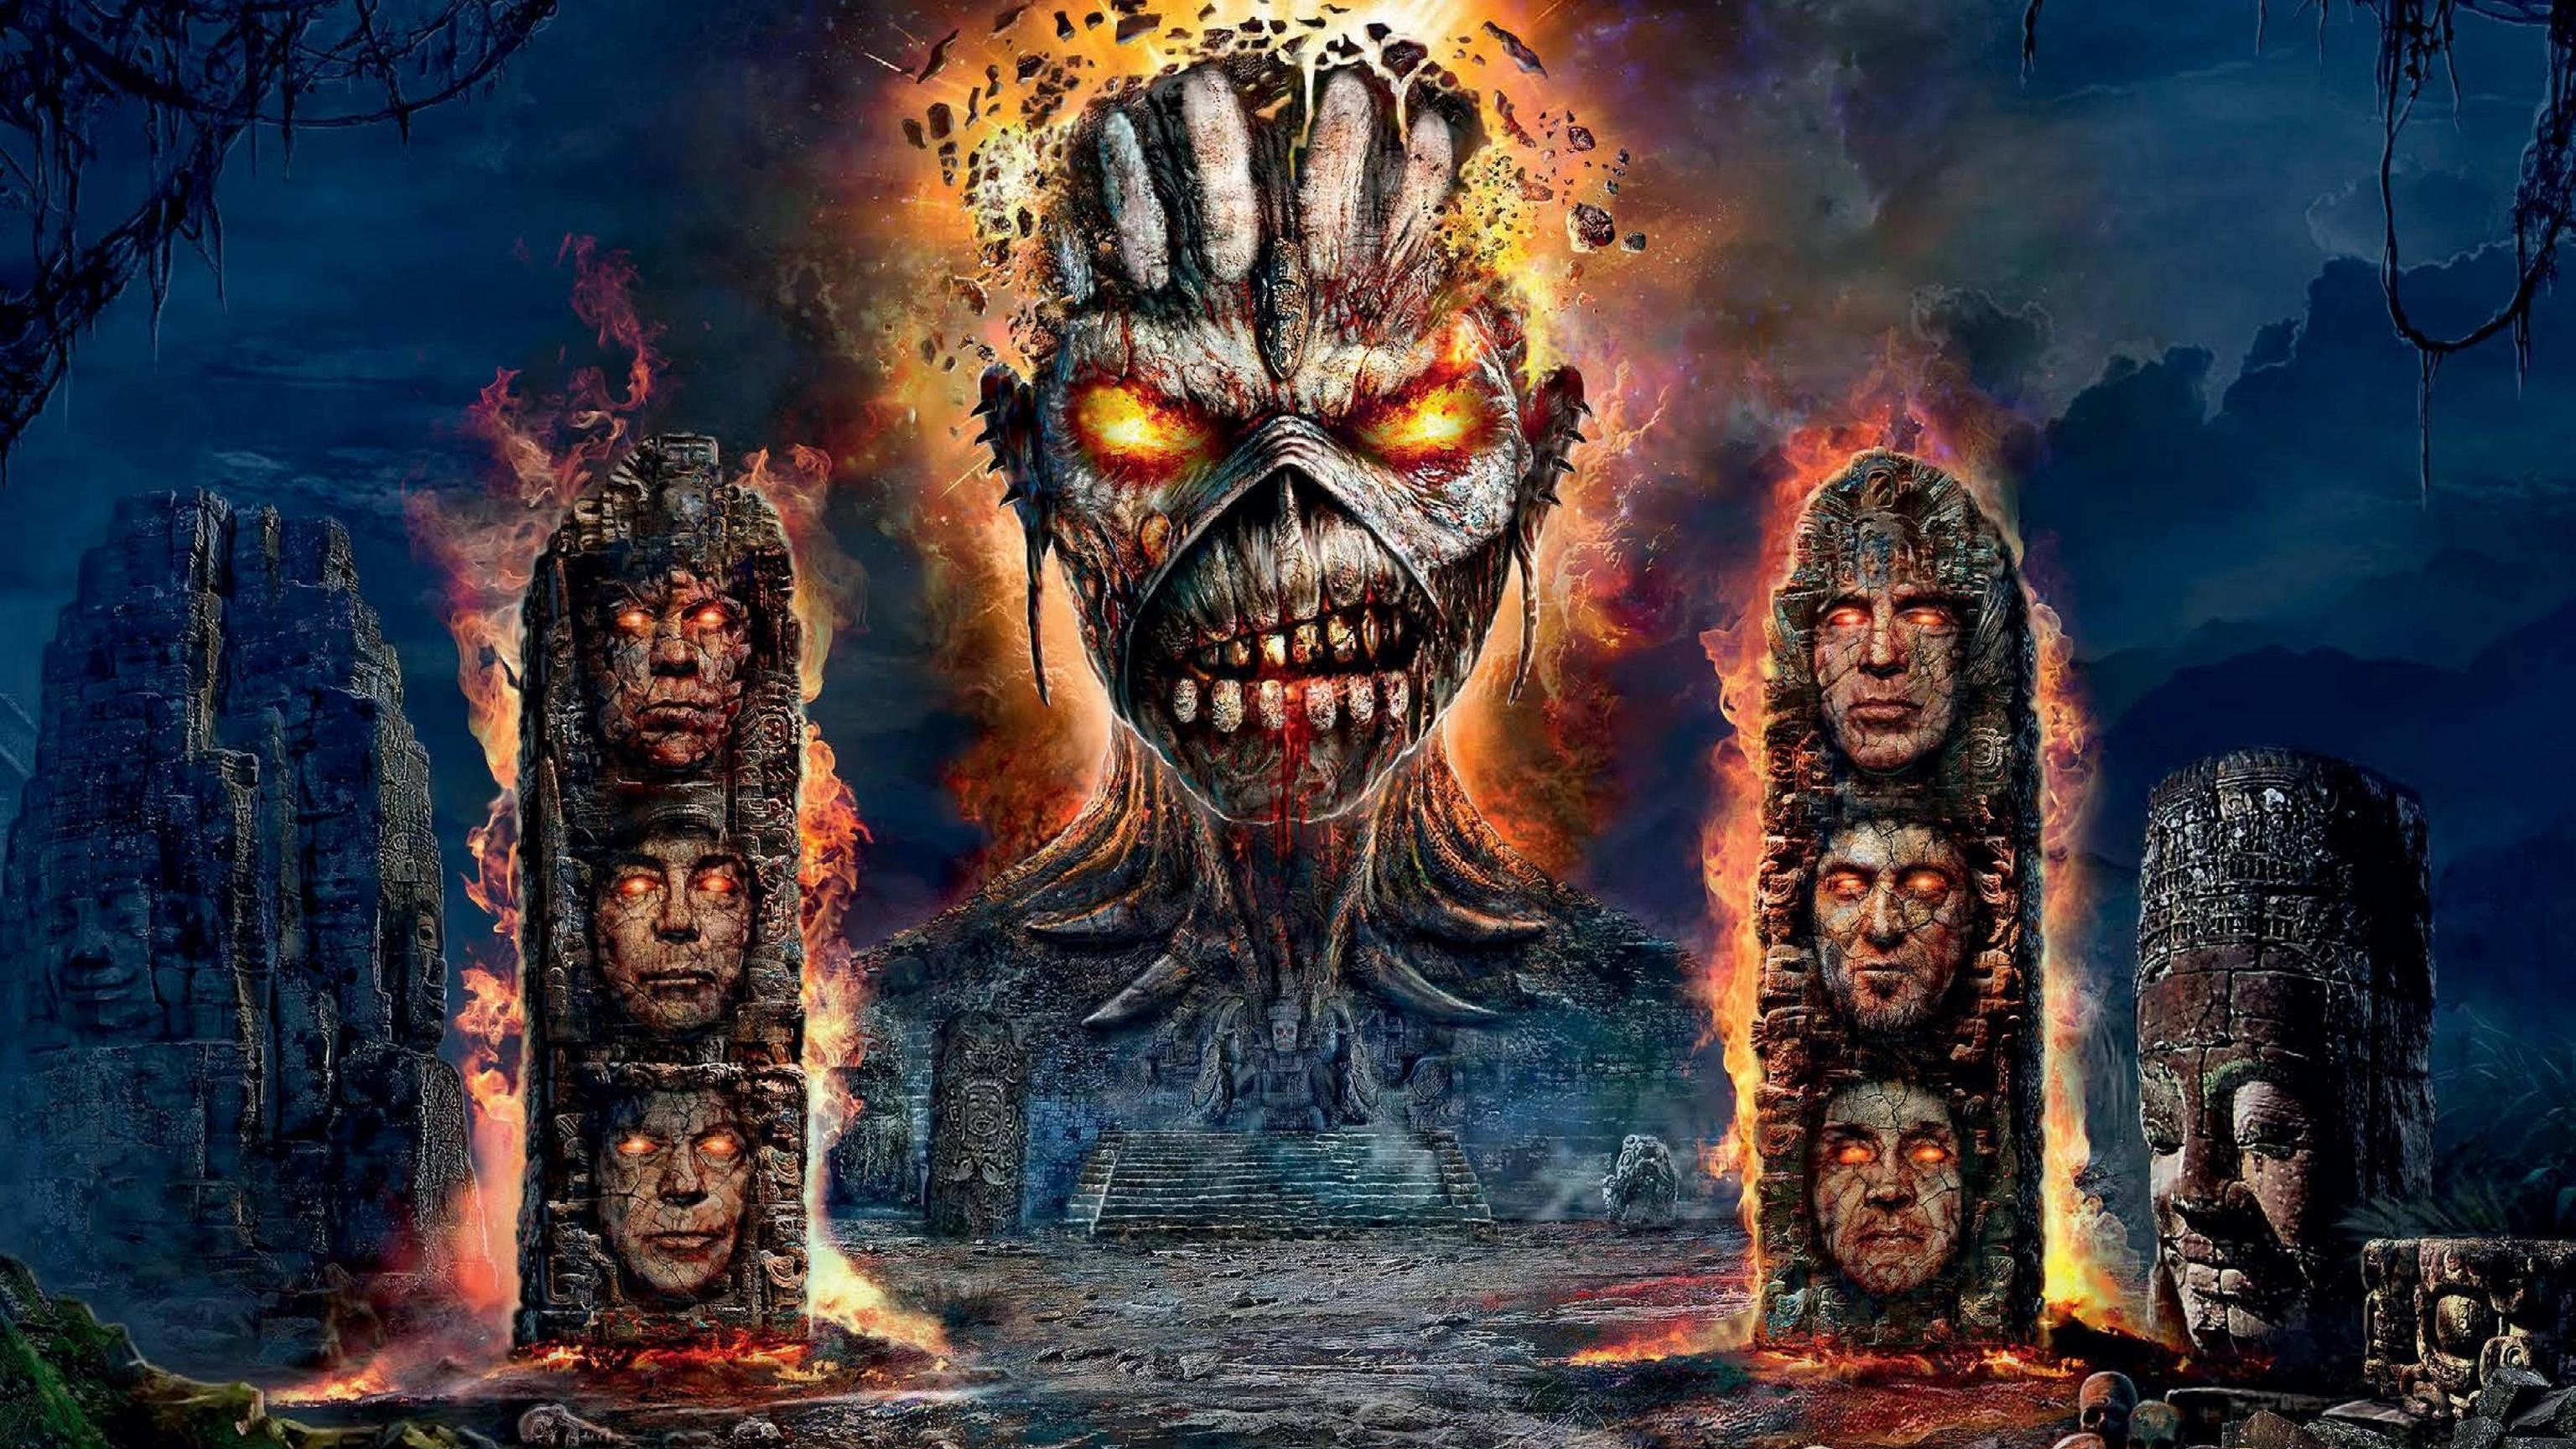 Iron Maiden Band Music, 4K wallpaper collection, Ultra HD visuals, Eye-catching graphics, 3080x1730 HD Desktop